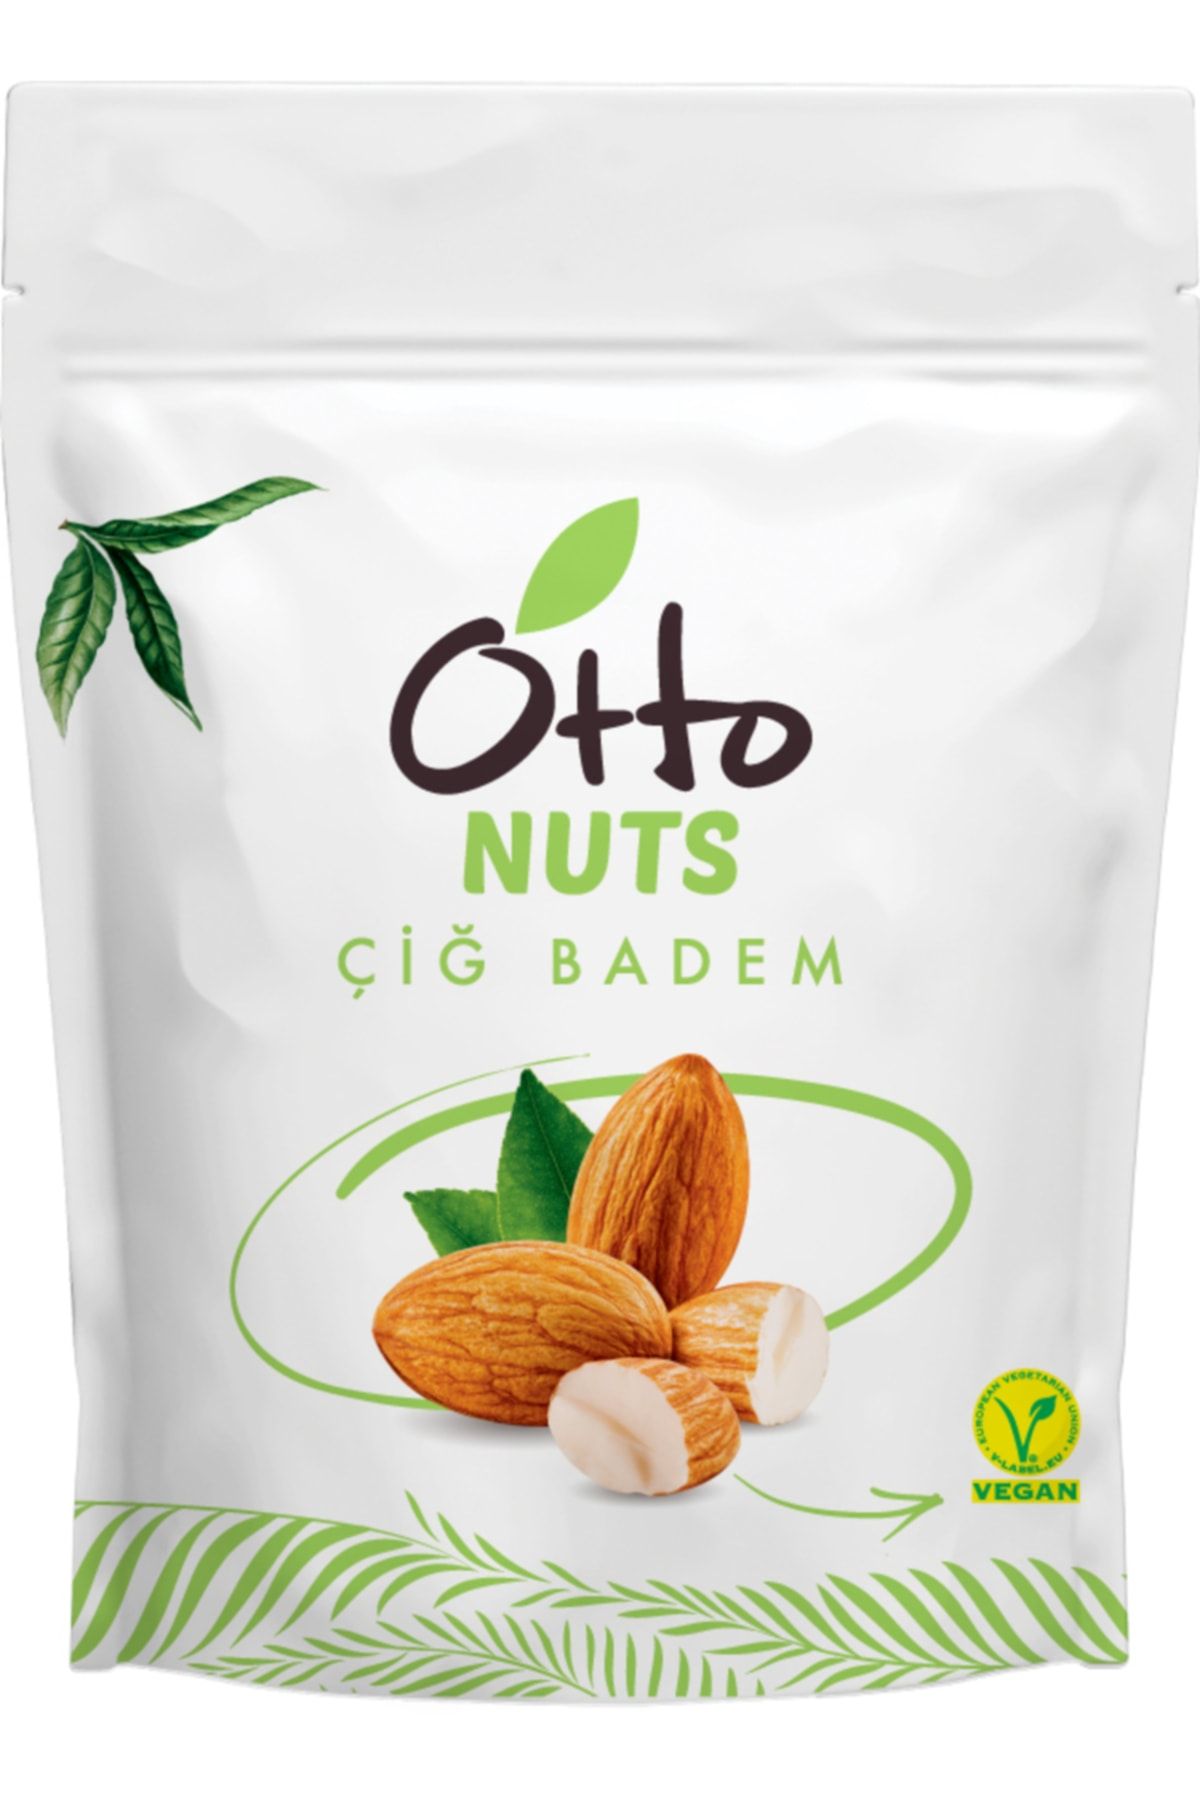 Otto Nuts Vegan Çiğ Badem 150 G